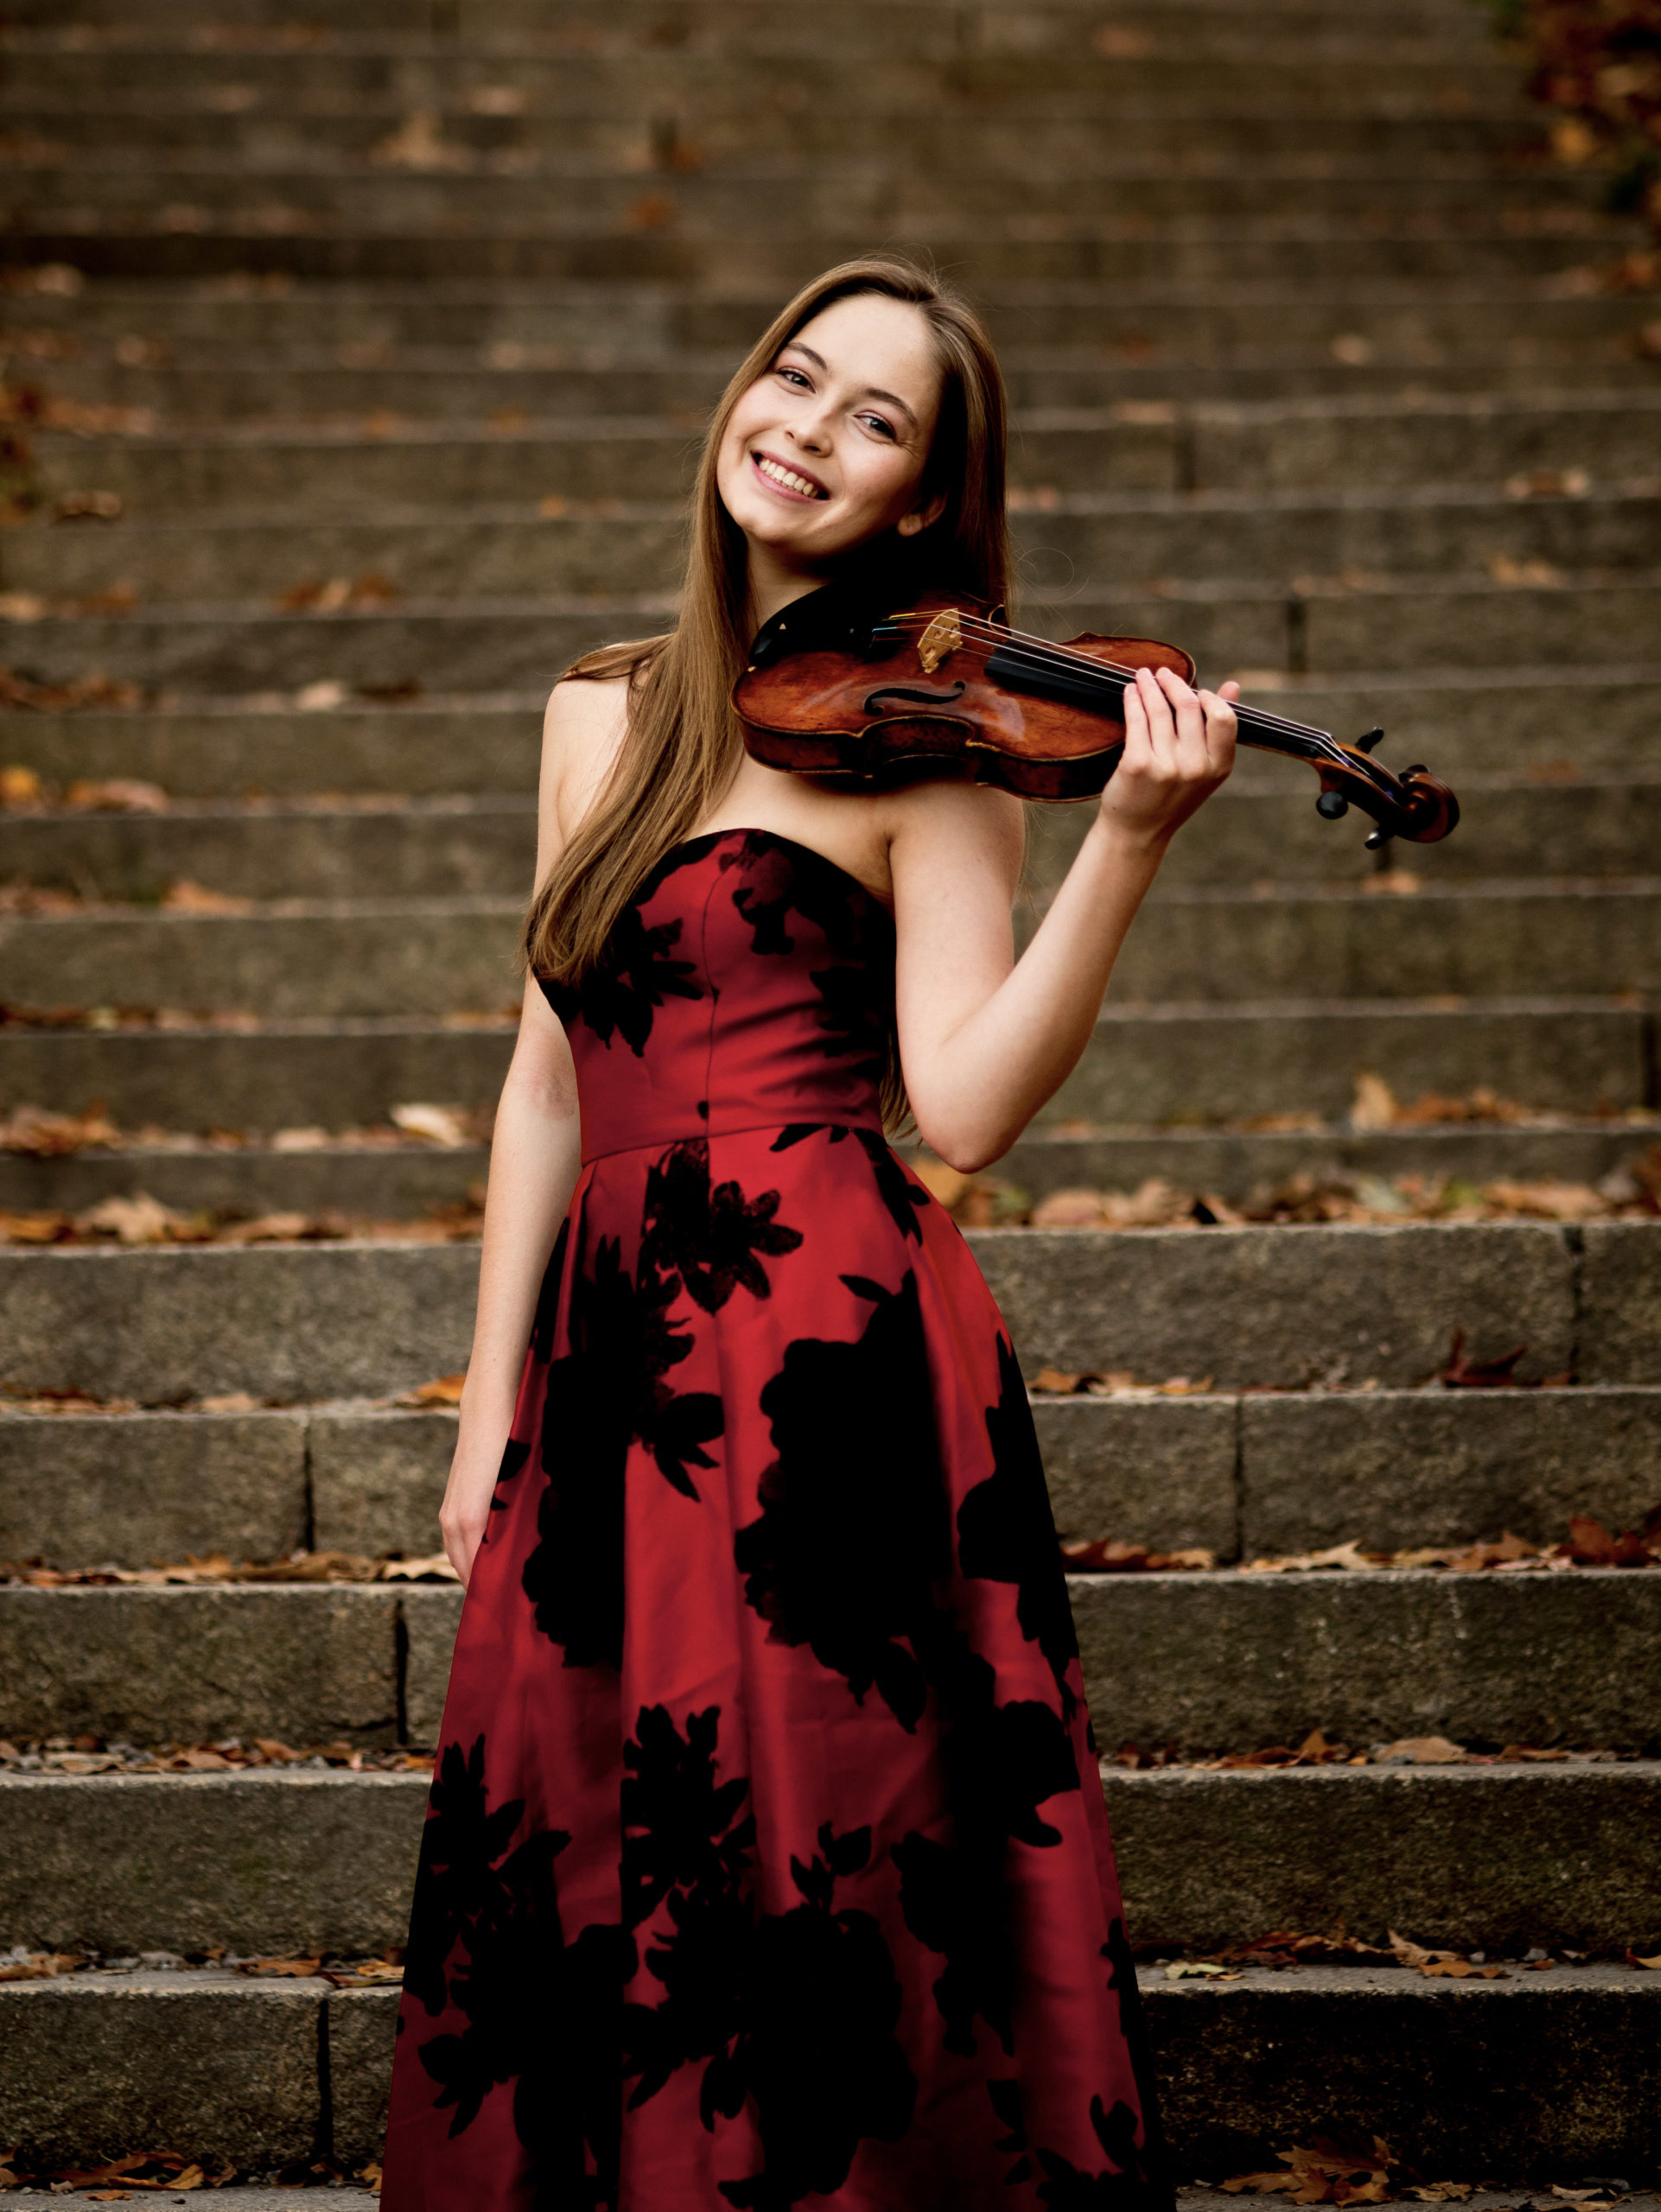 Geneva Lewis, violin